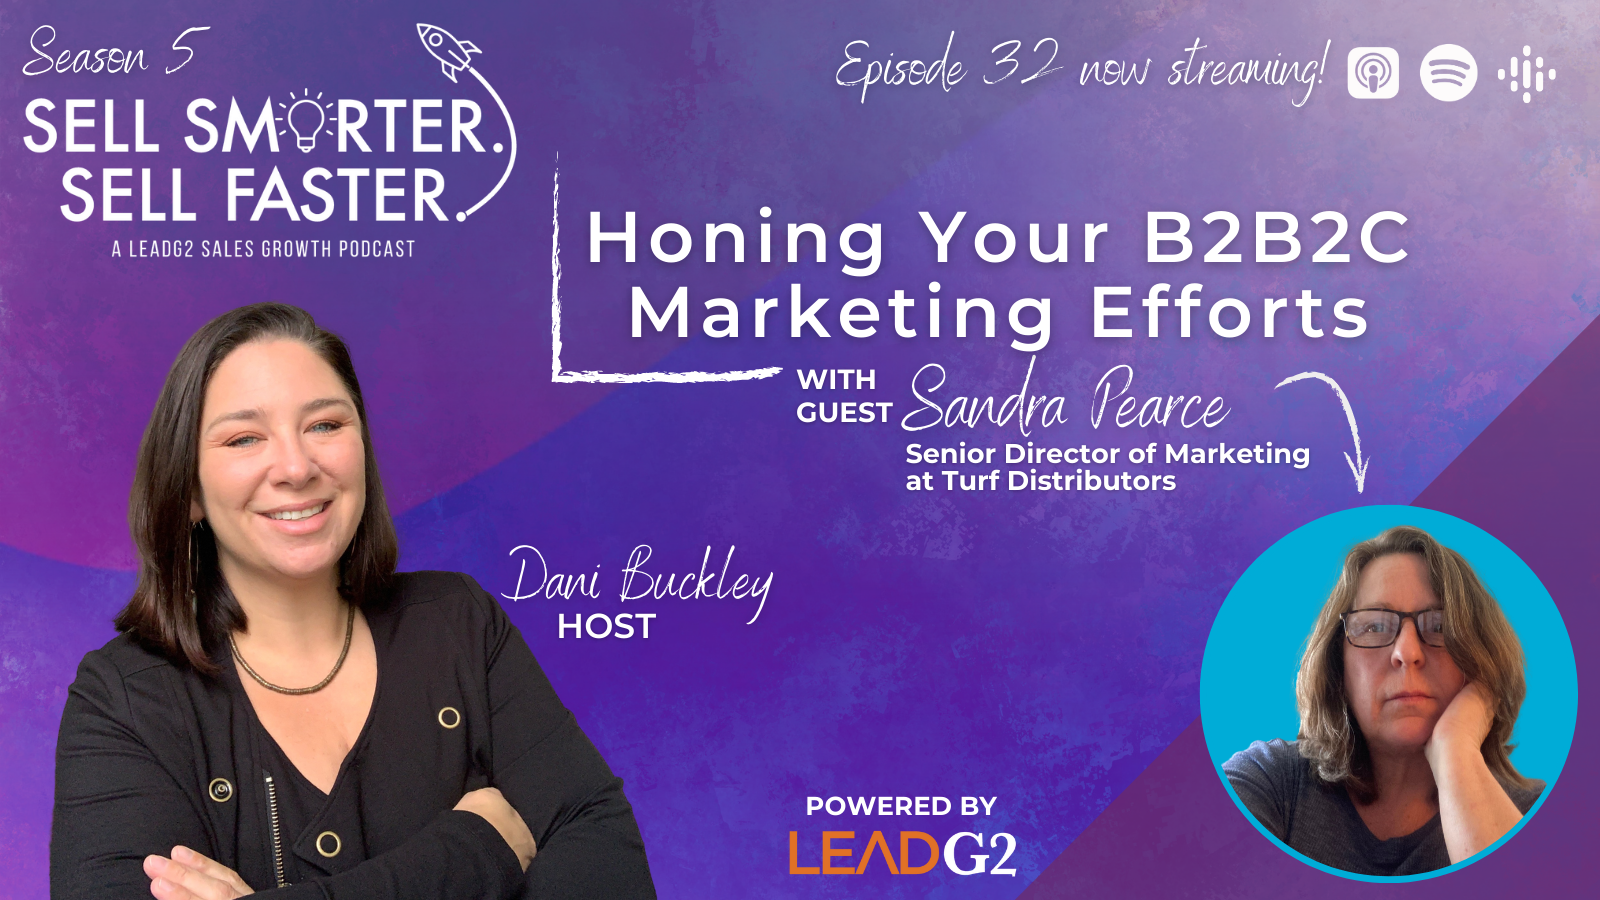 Honing Your B2B2C Marketing Efforts with Sandra Pearce 